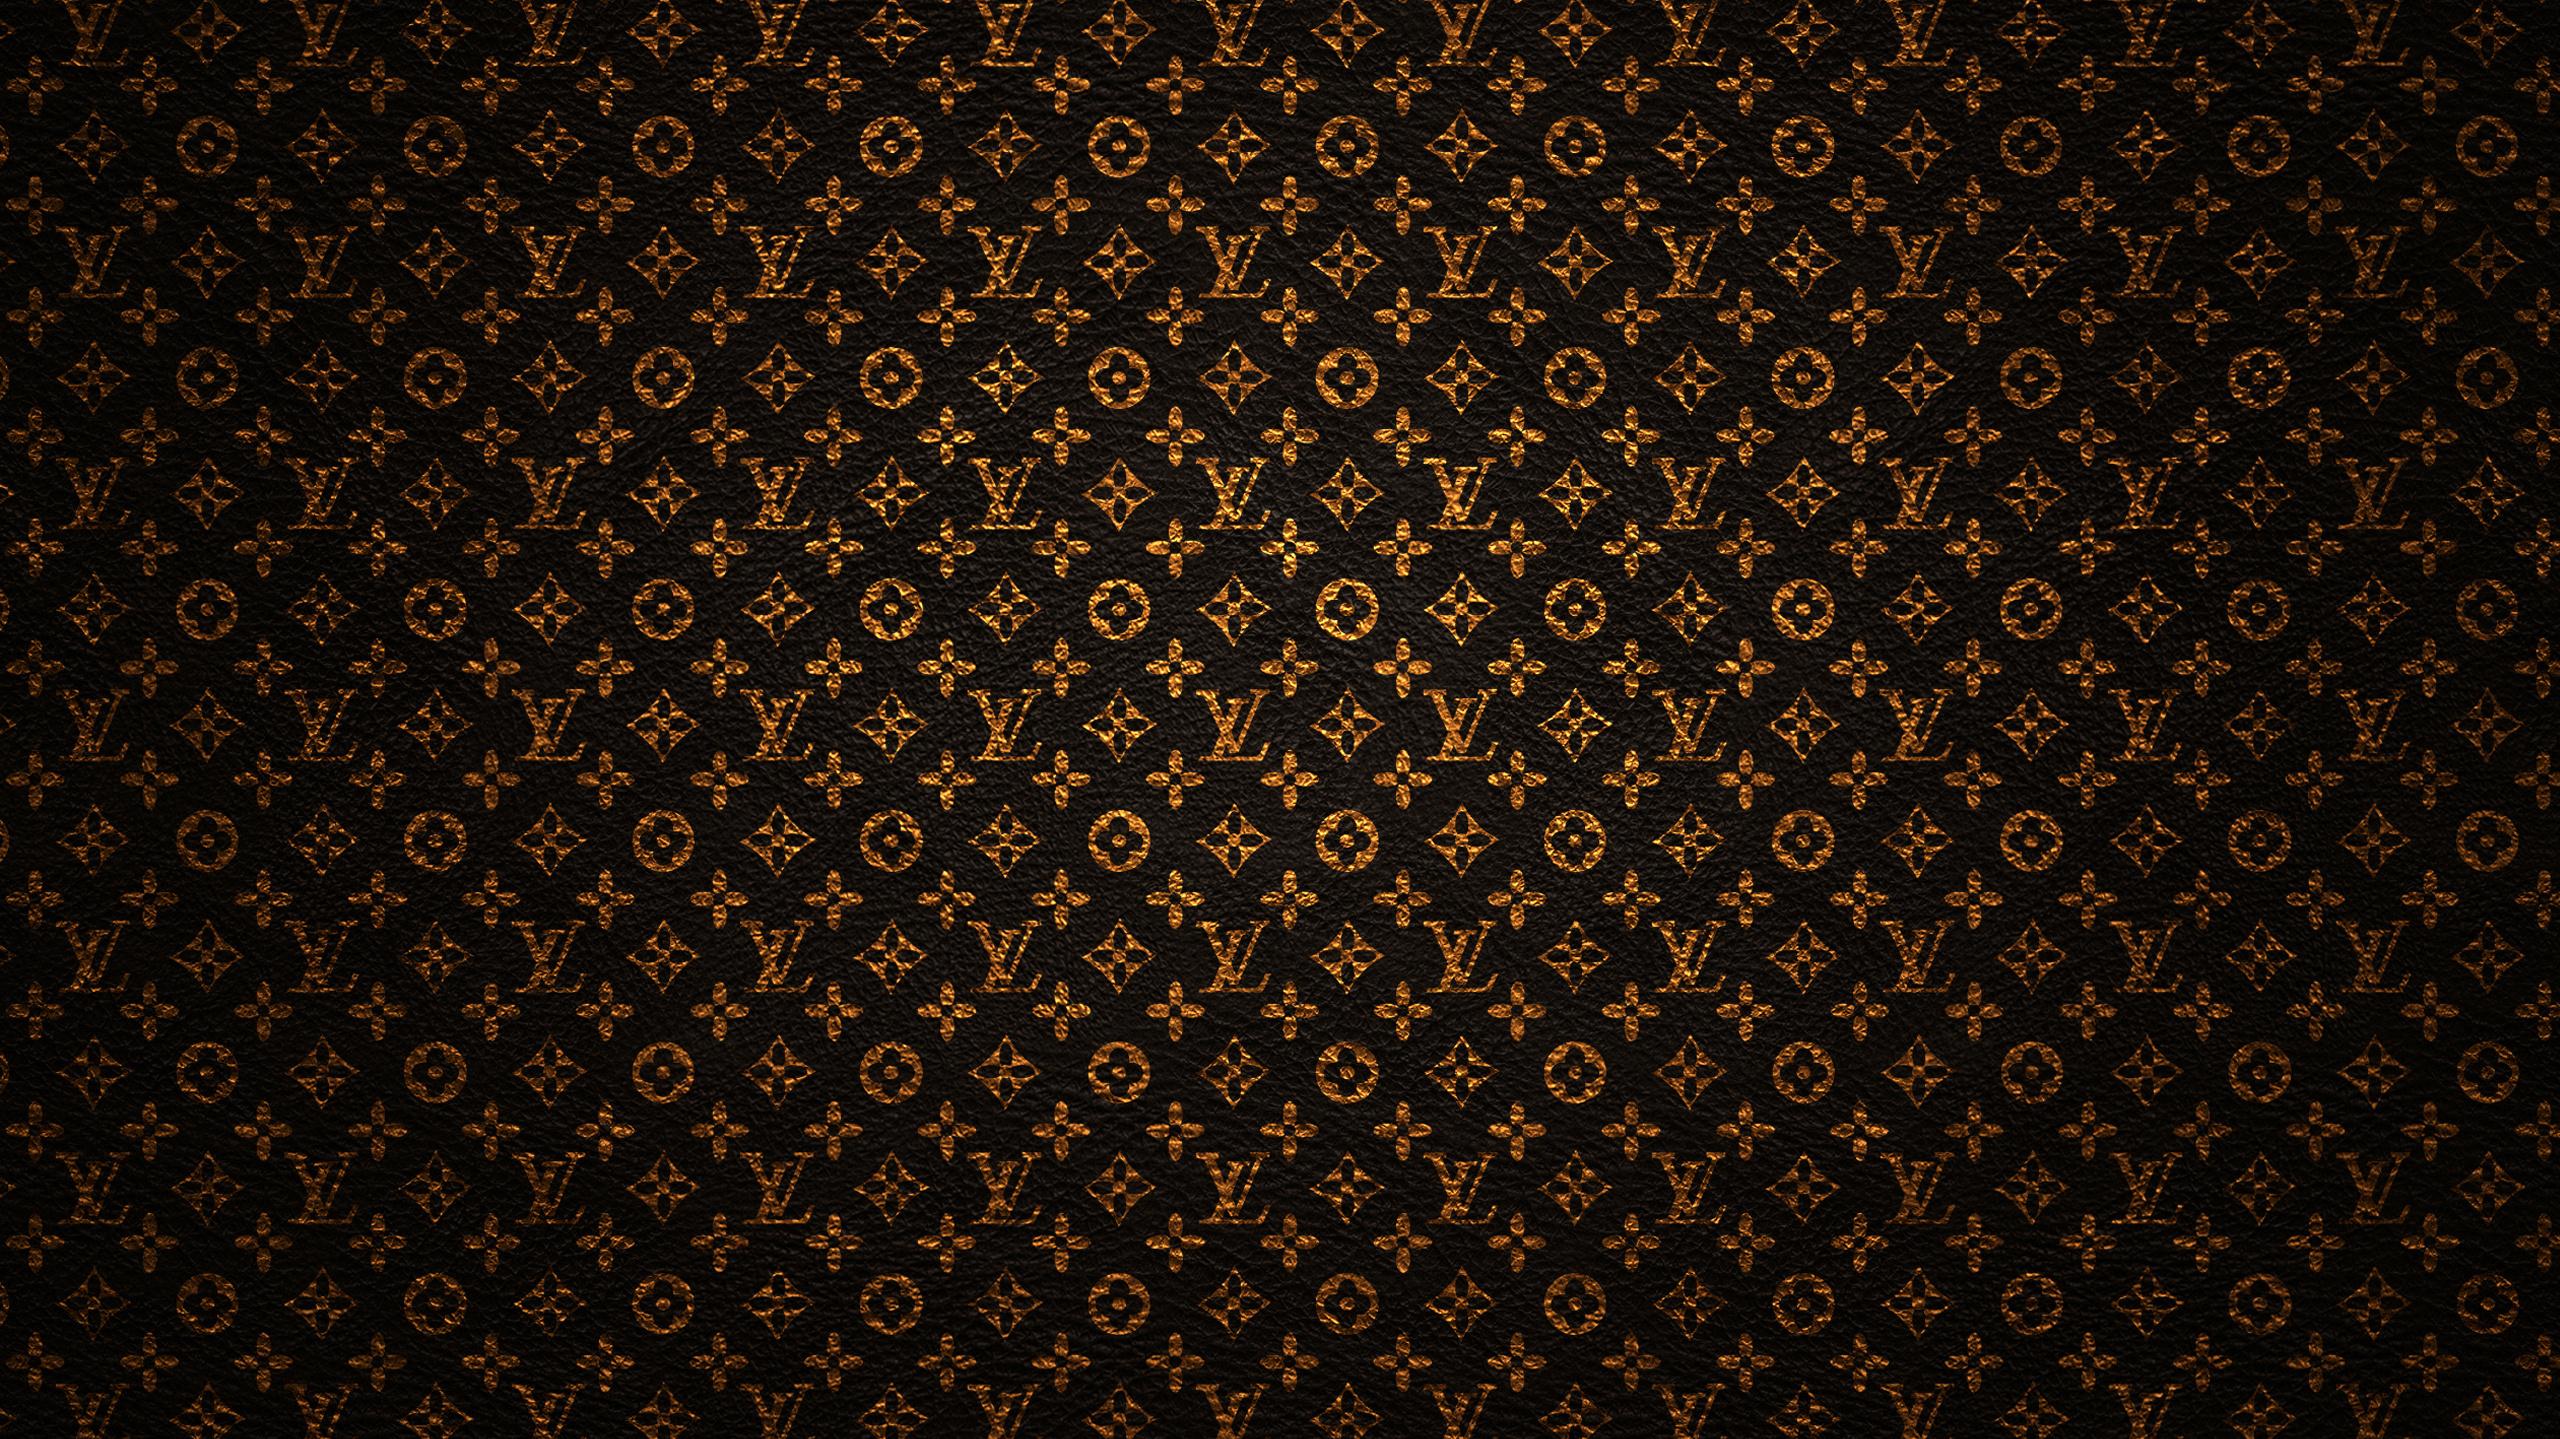 30+] Wallpaper Louis Vuitton - WallpaperSafari